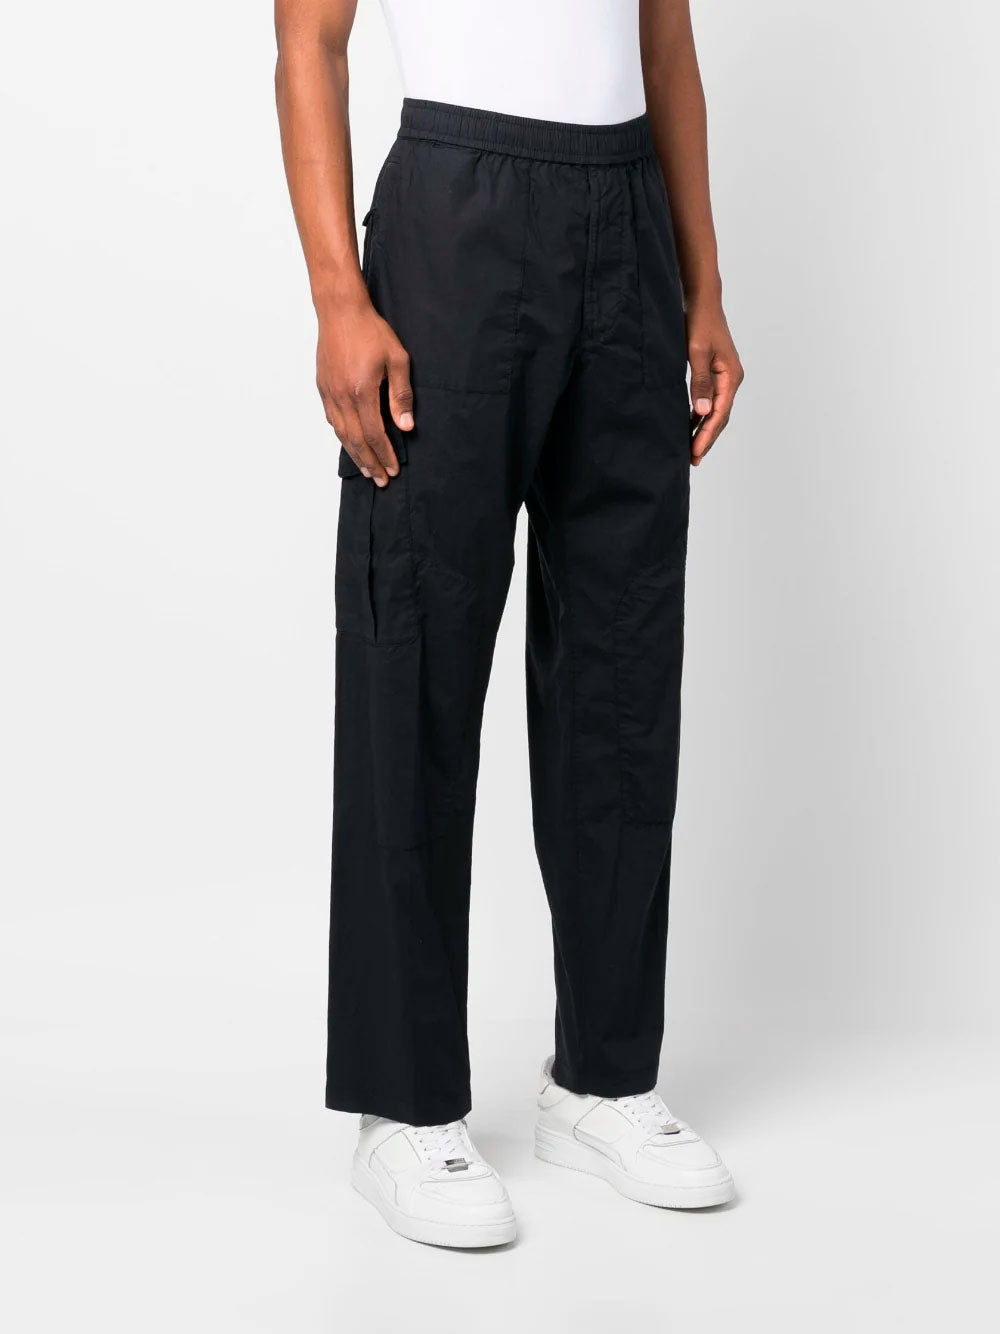 Compass-logo cotton cargo trousers